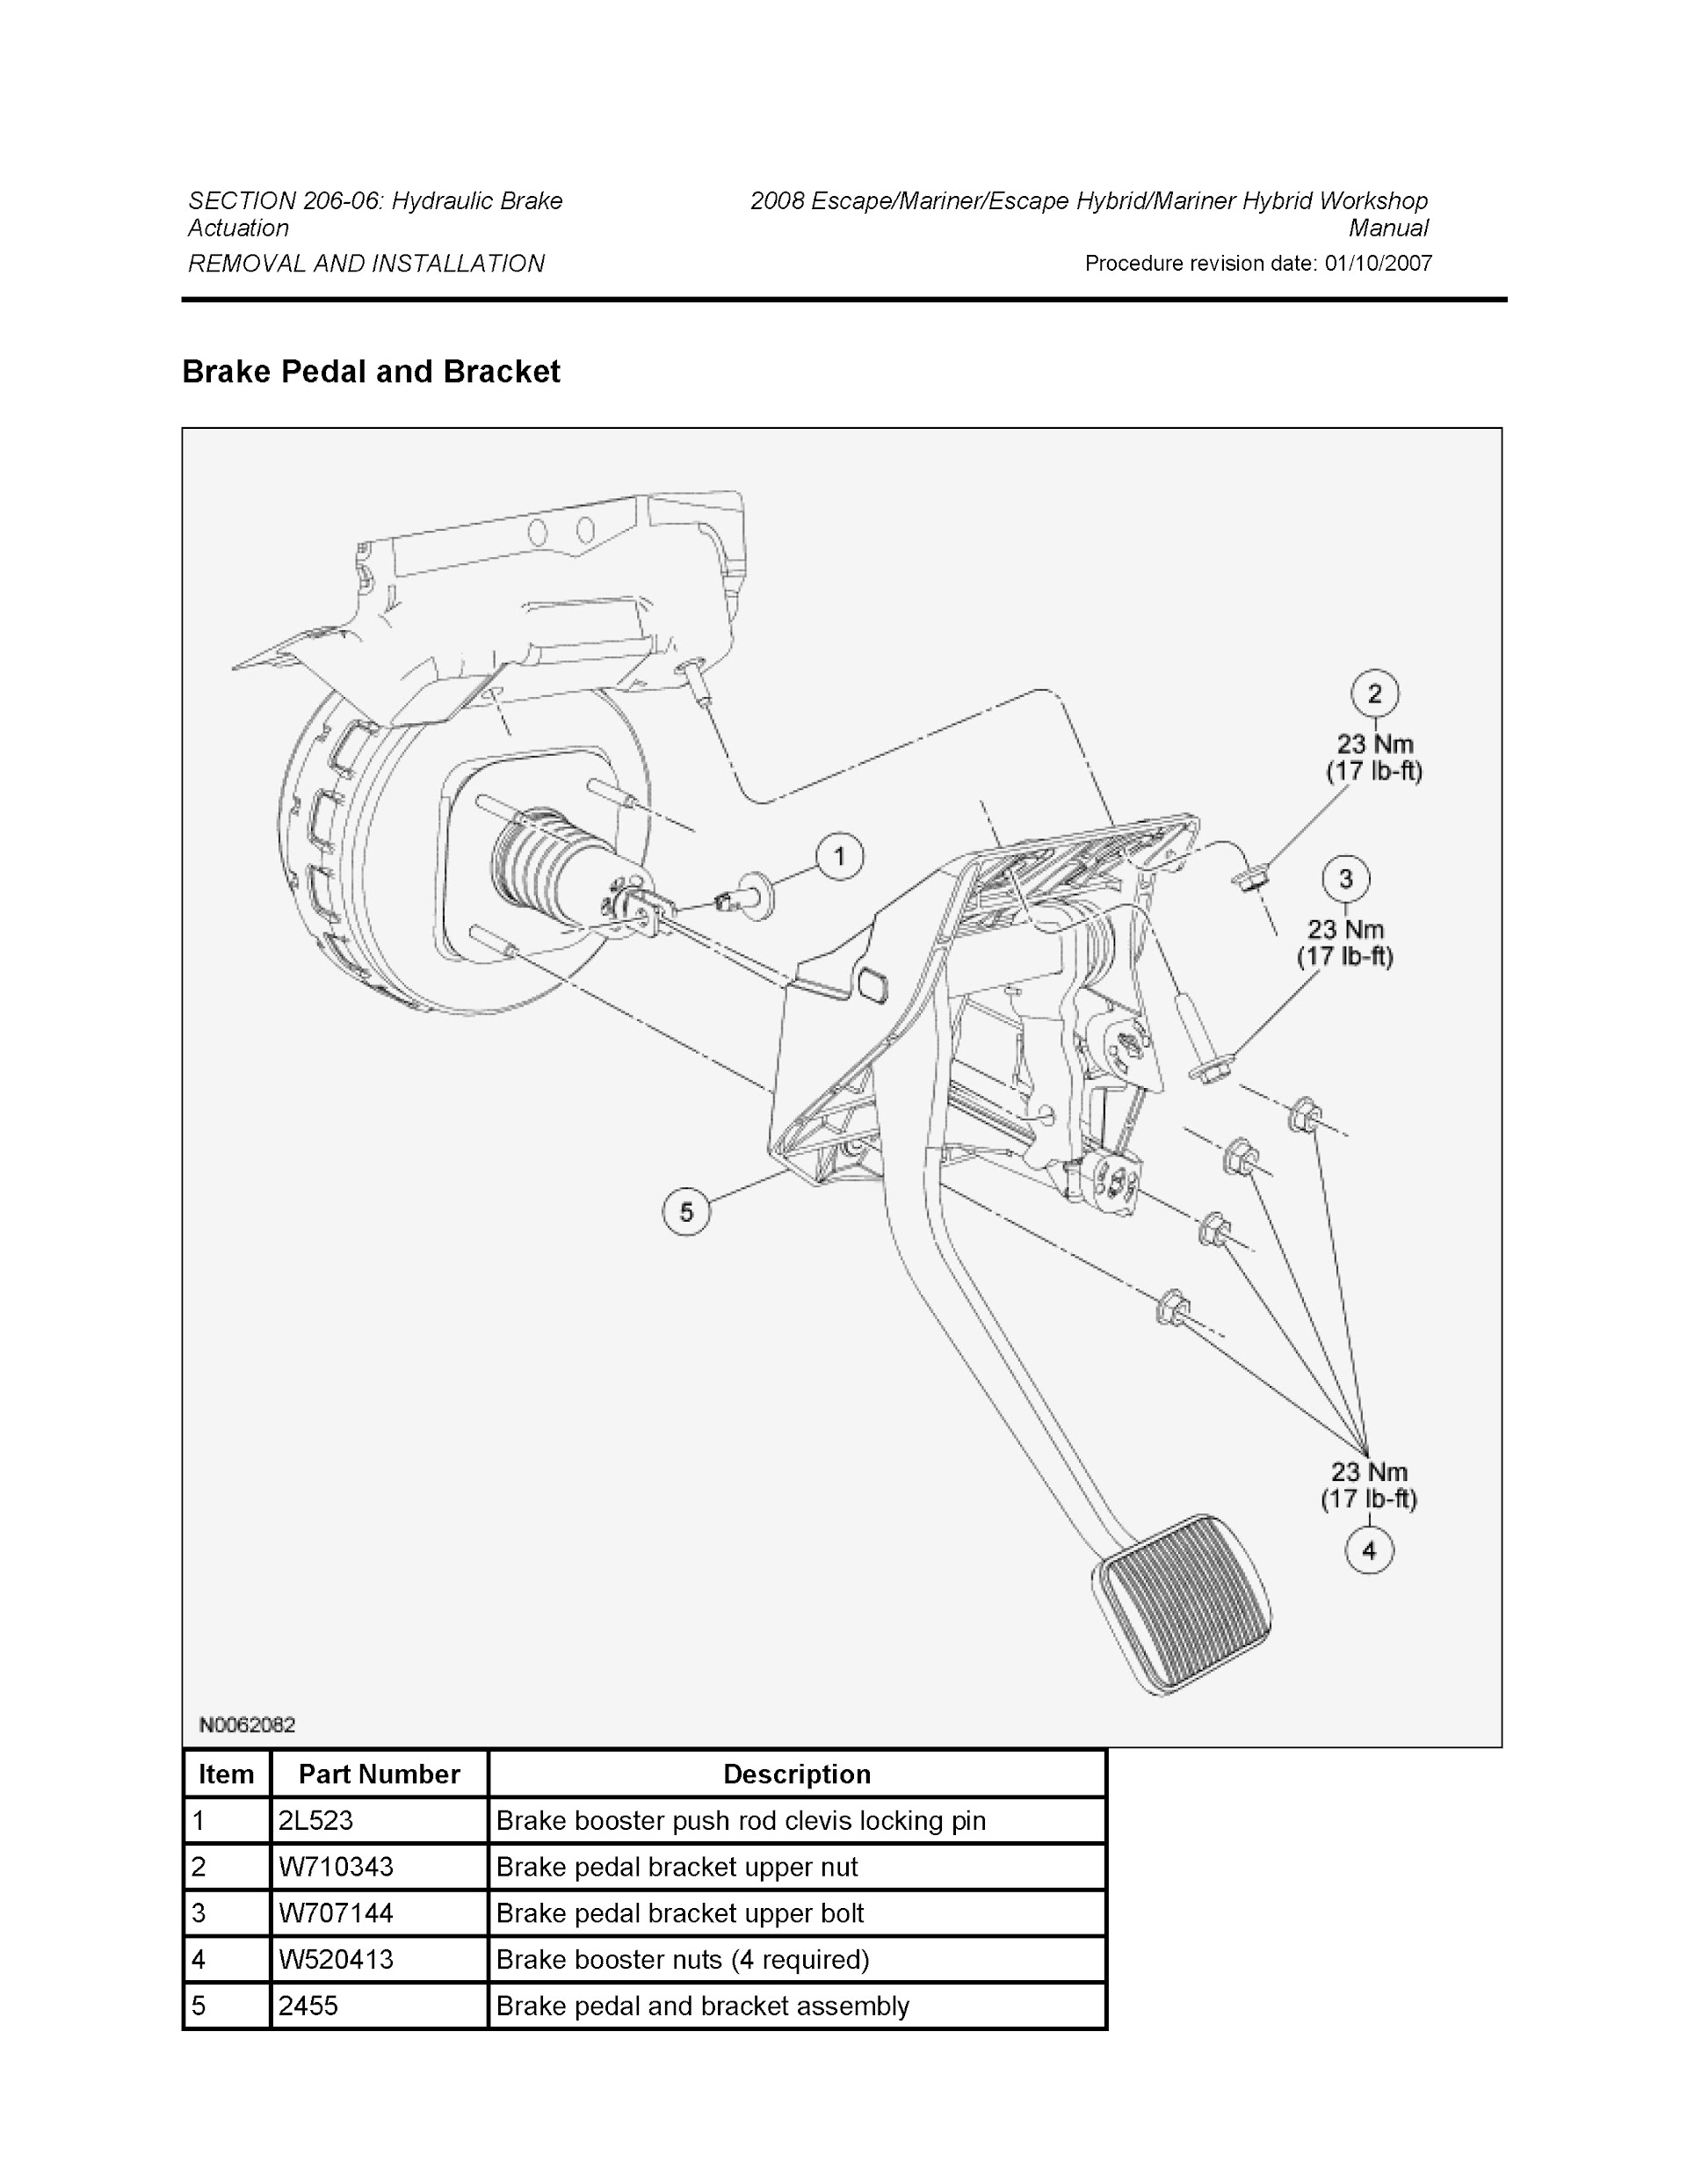 2011 Ford Escape Repair Manual Brake Pedal and Bracket